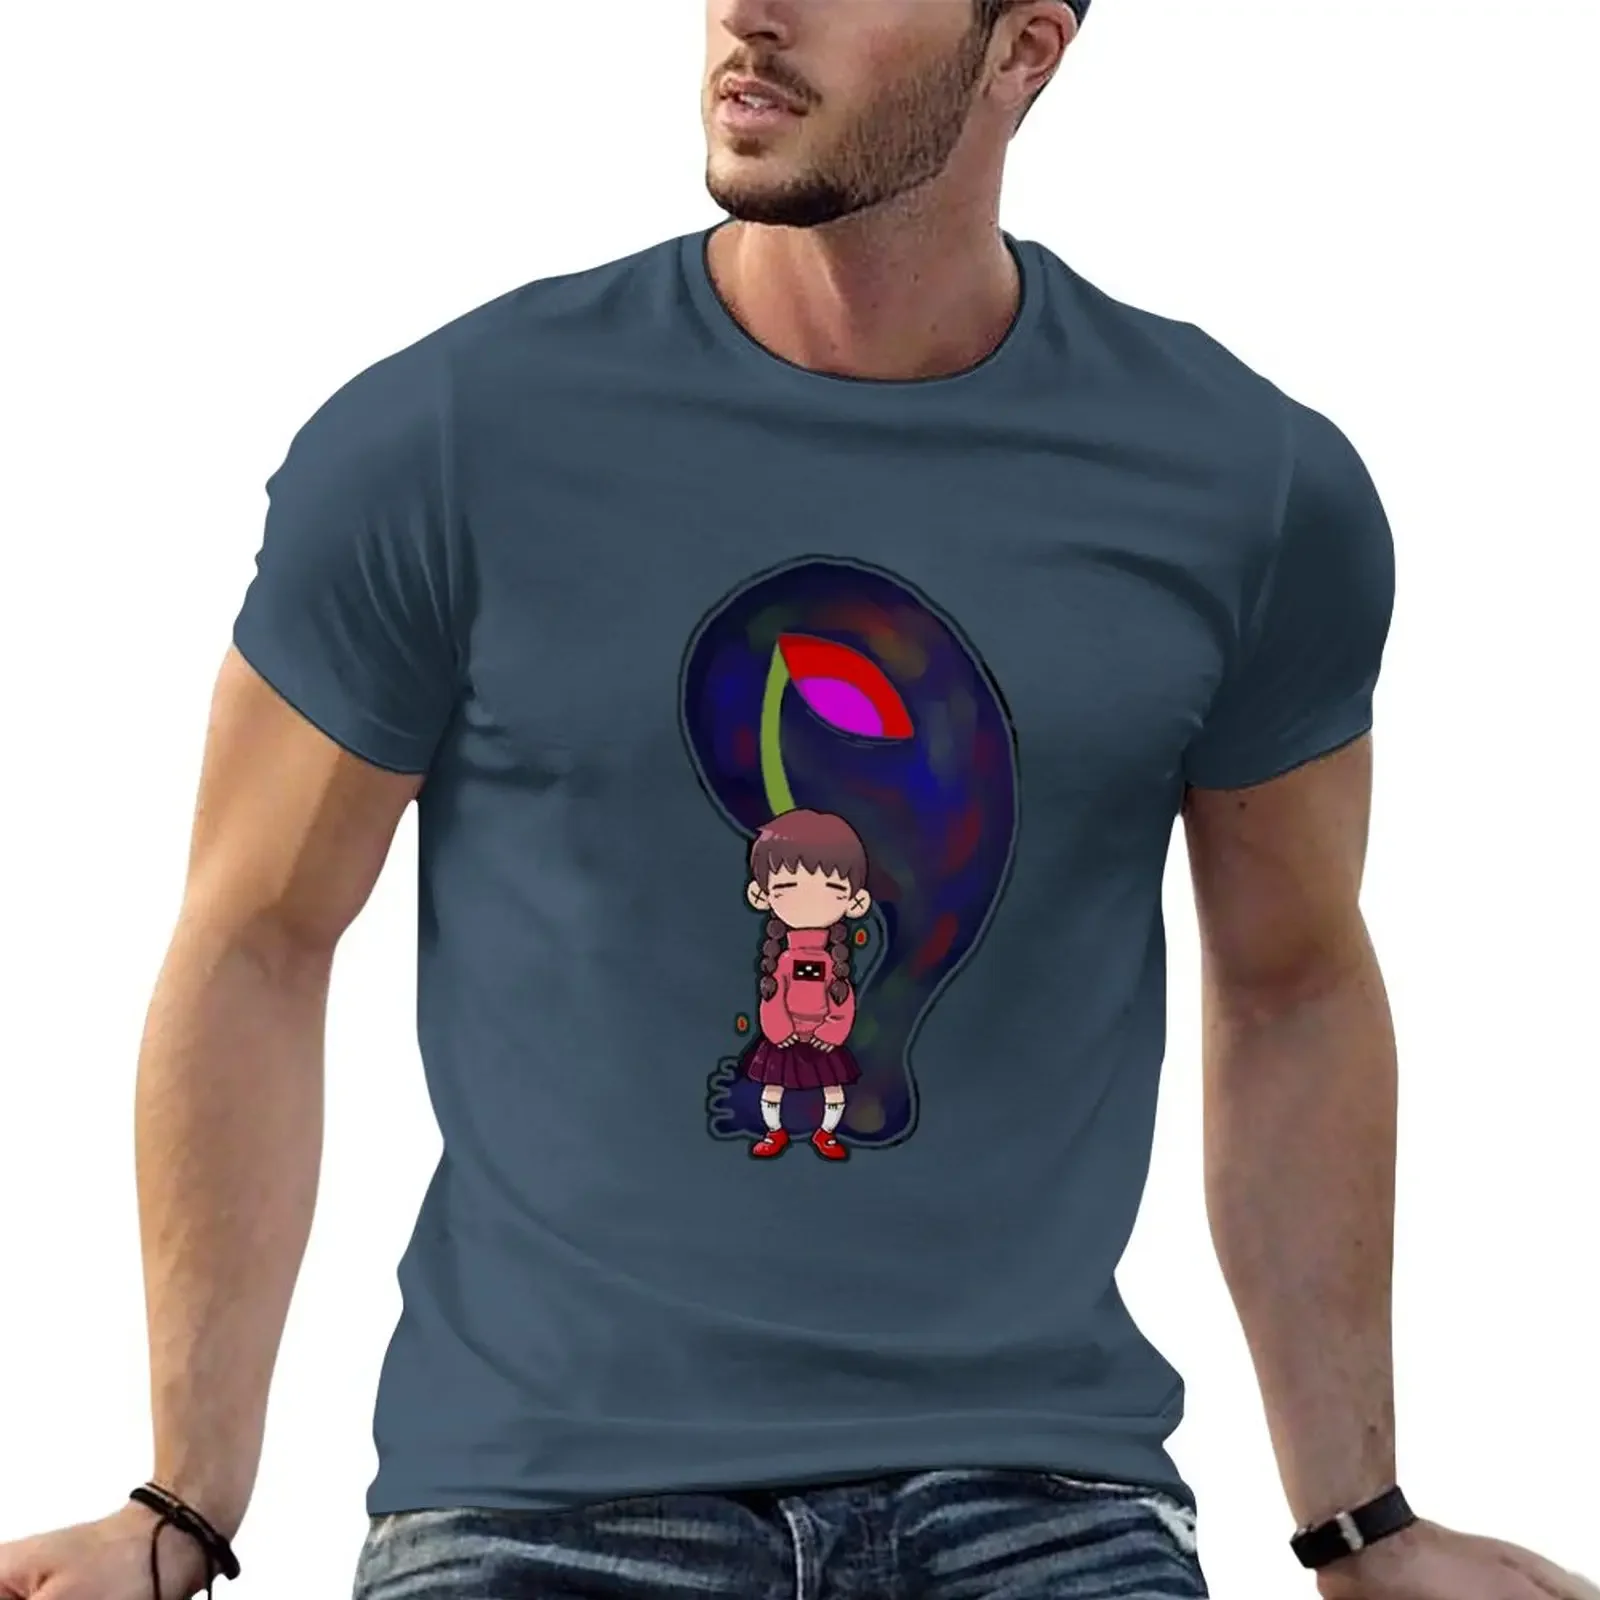 

Mars-san T-Shirt cute tops vintage graphics mens clothing